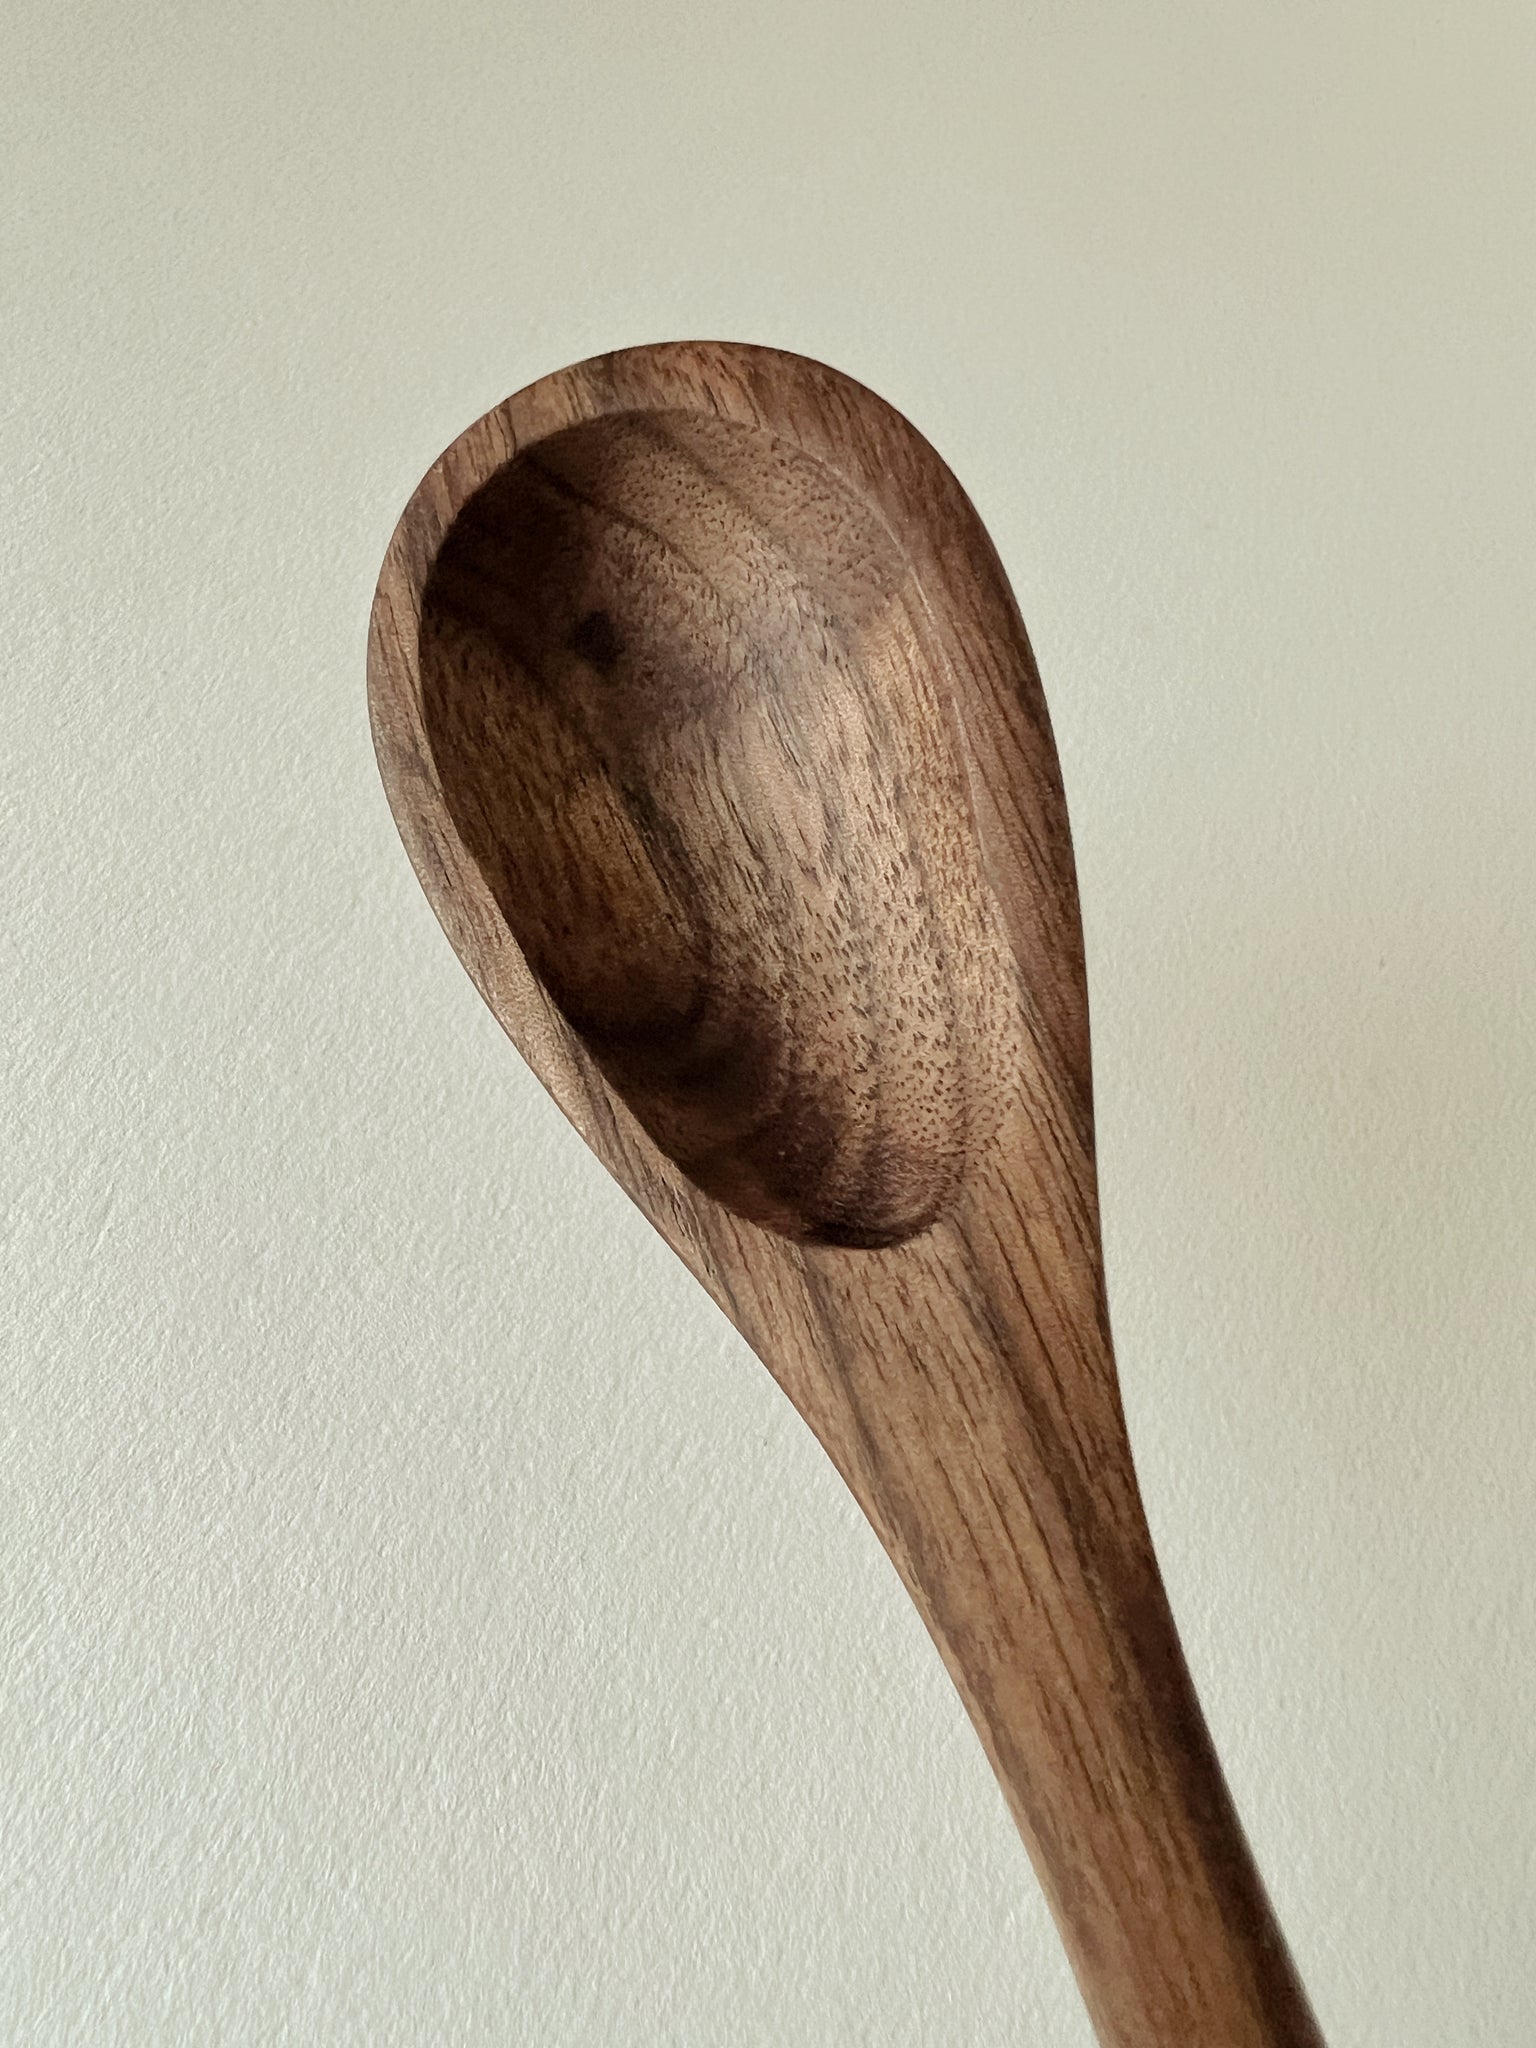 14" Hand Carved Stir Spoon